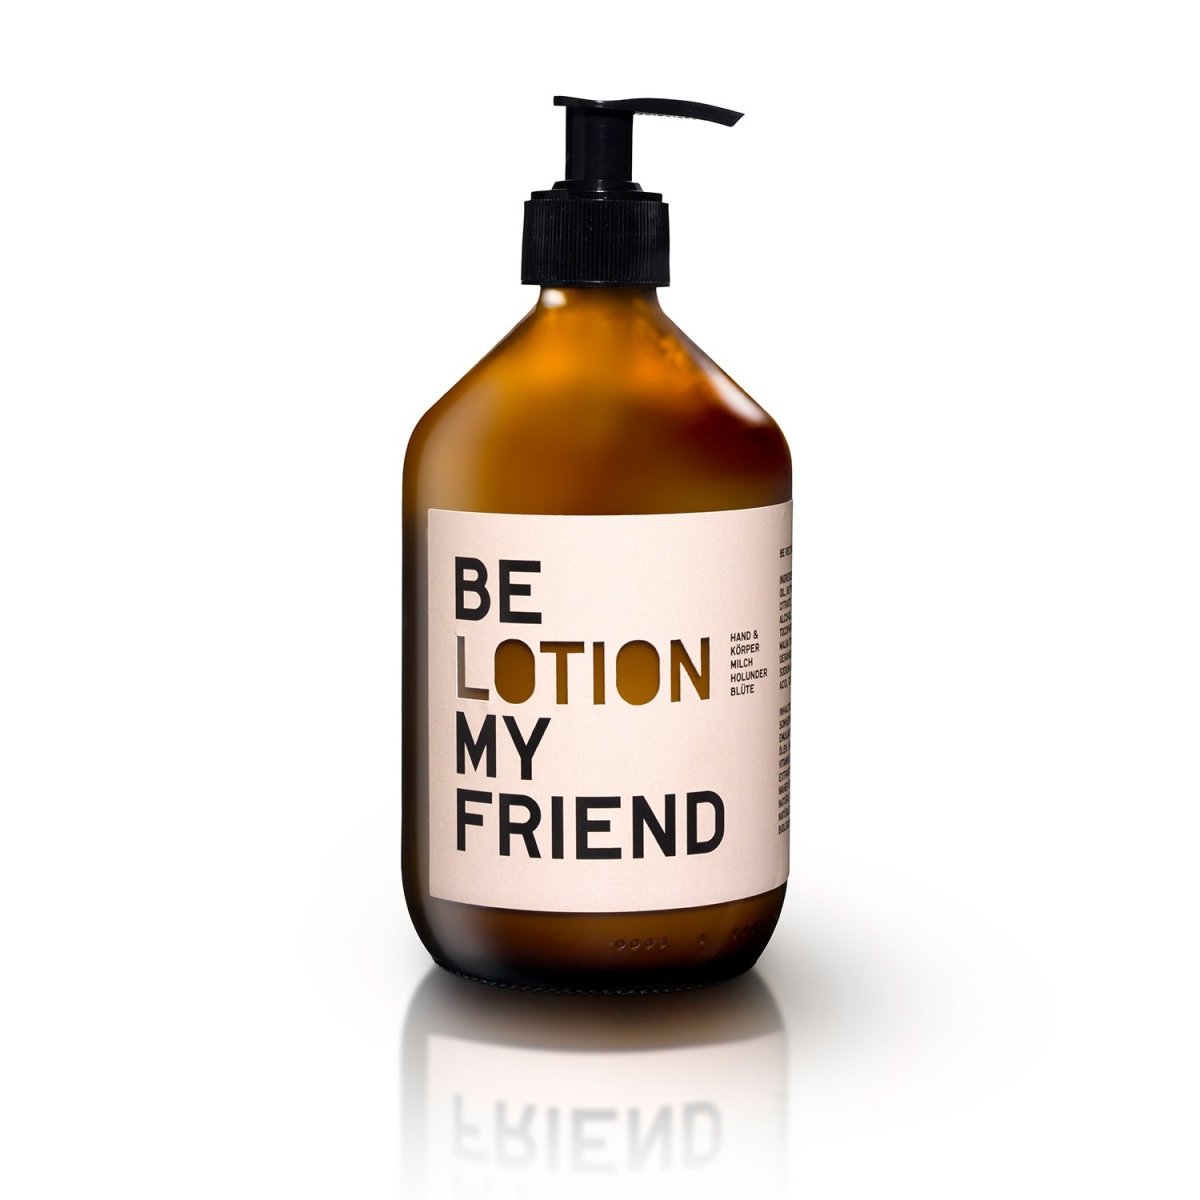 Be (LOTION) My Friend - Hand and Body Milk with Elderflower 500ml